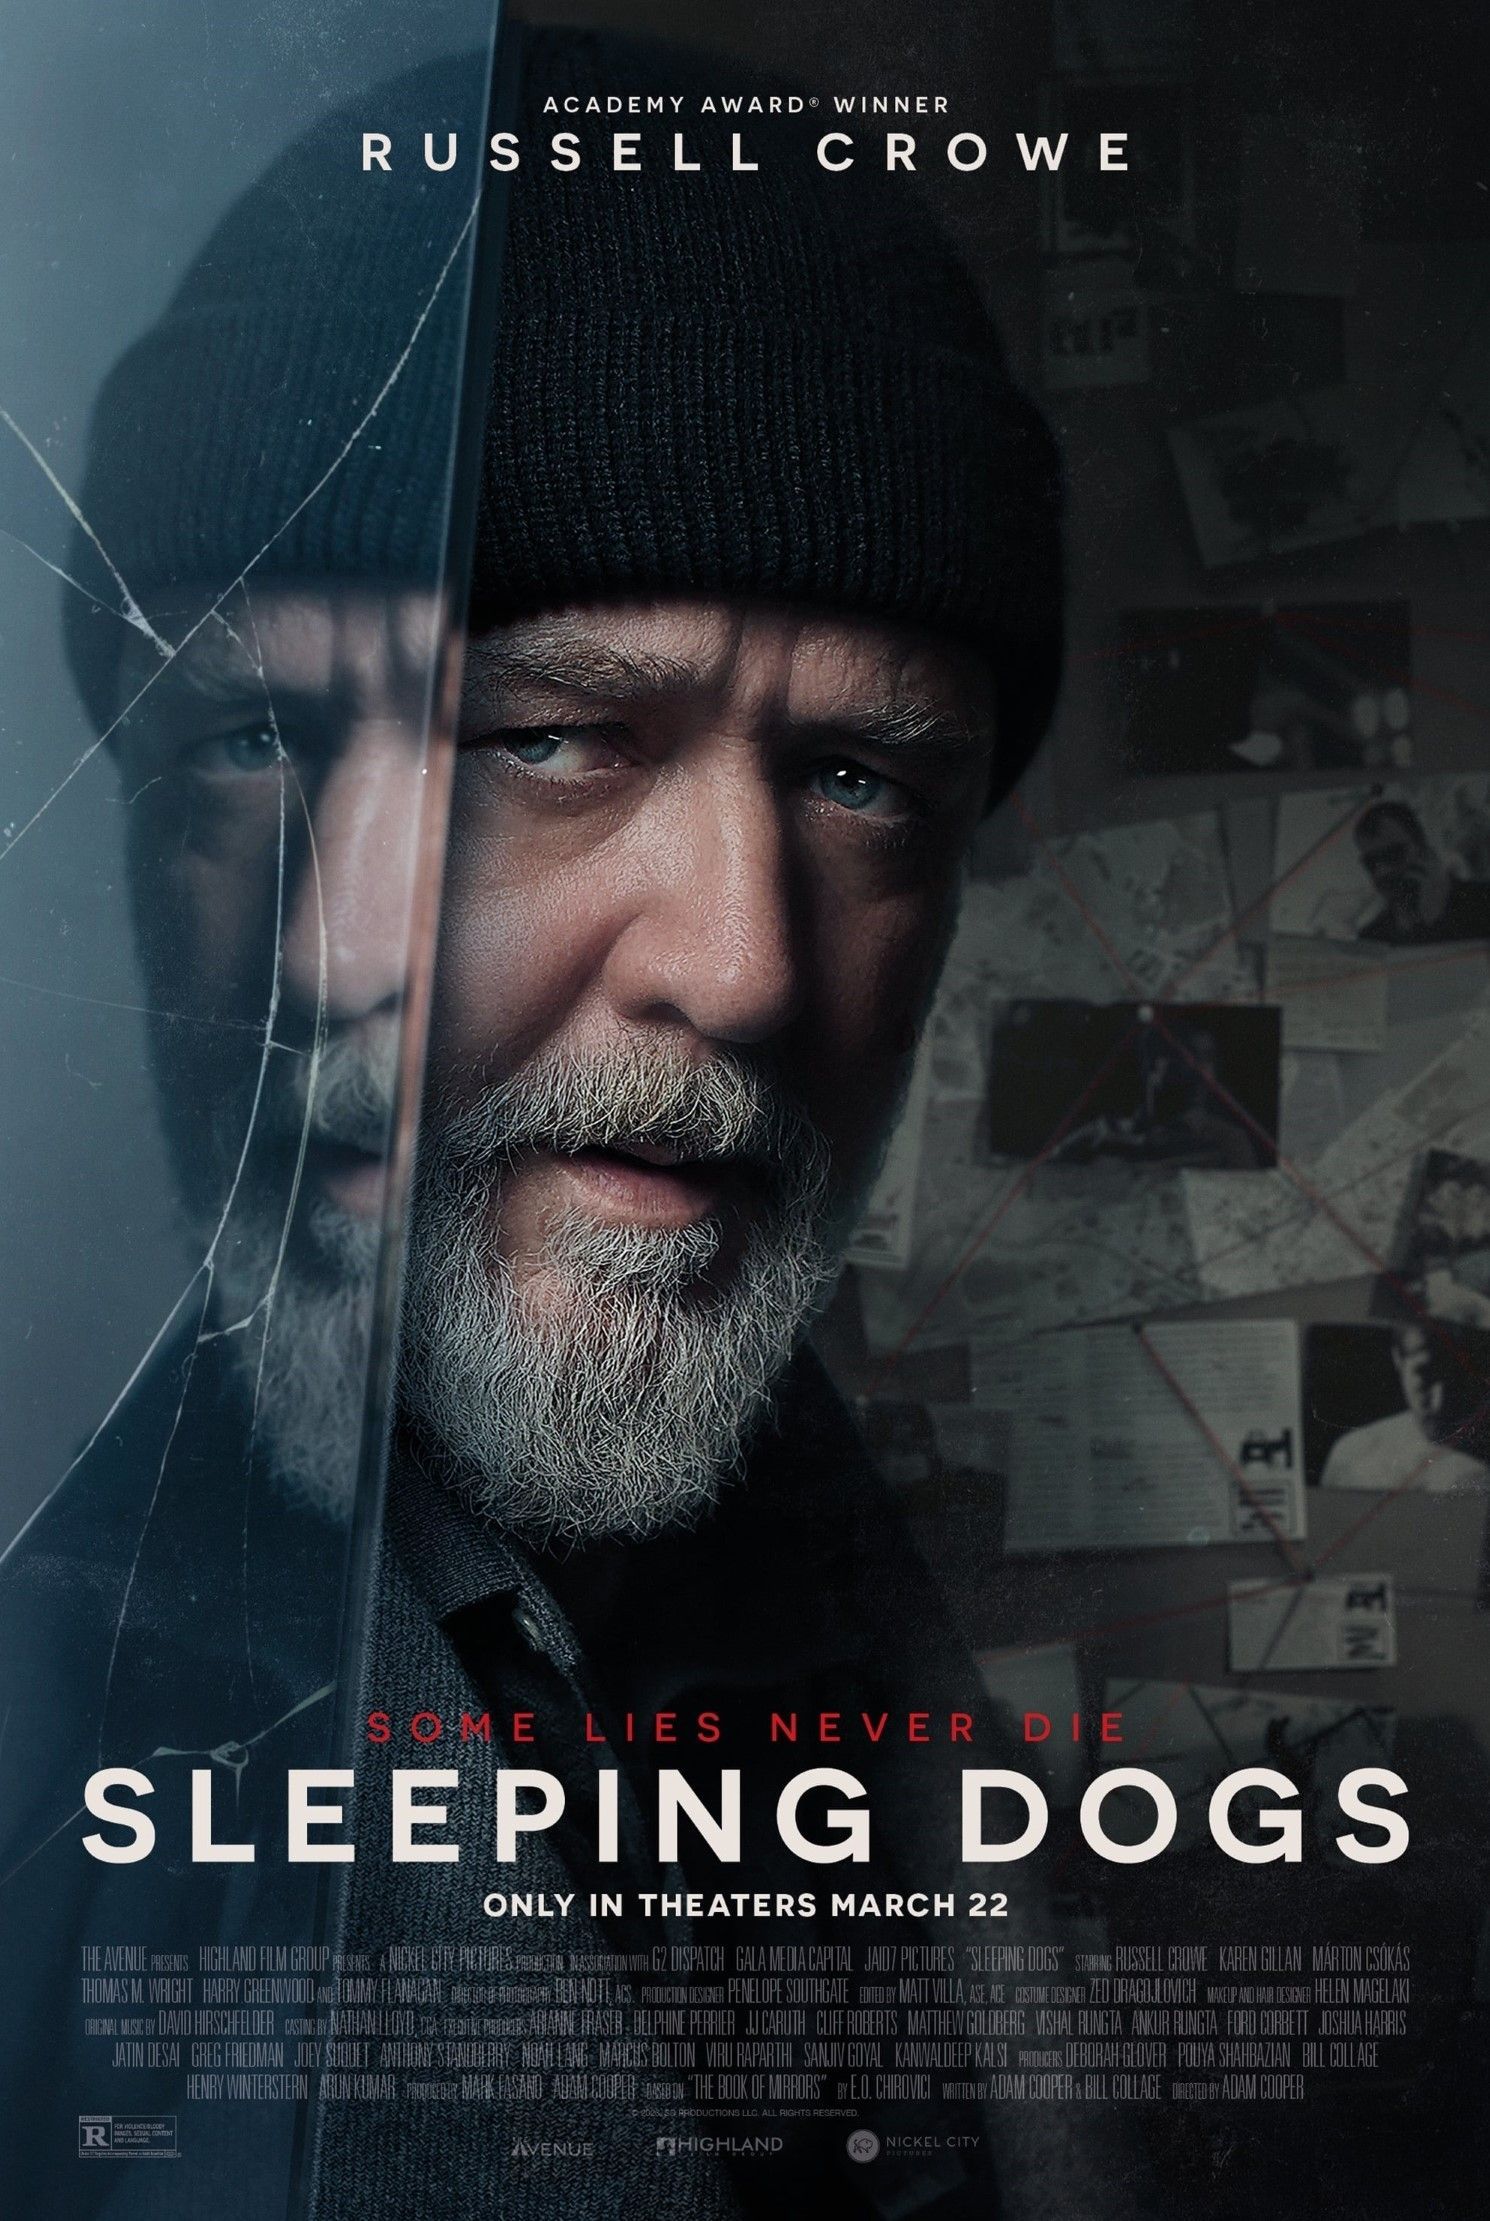 Russell Crowe & Karen Gillan Face Off In Tense Sleeping Dogs Clip [EXCLUSIVE]